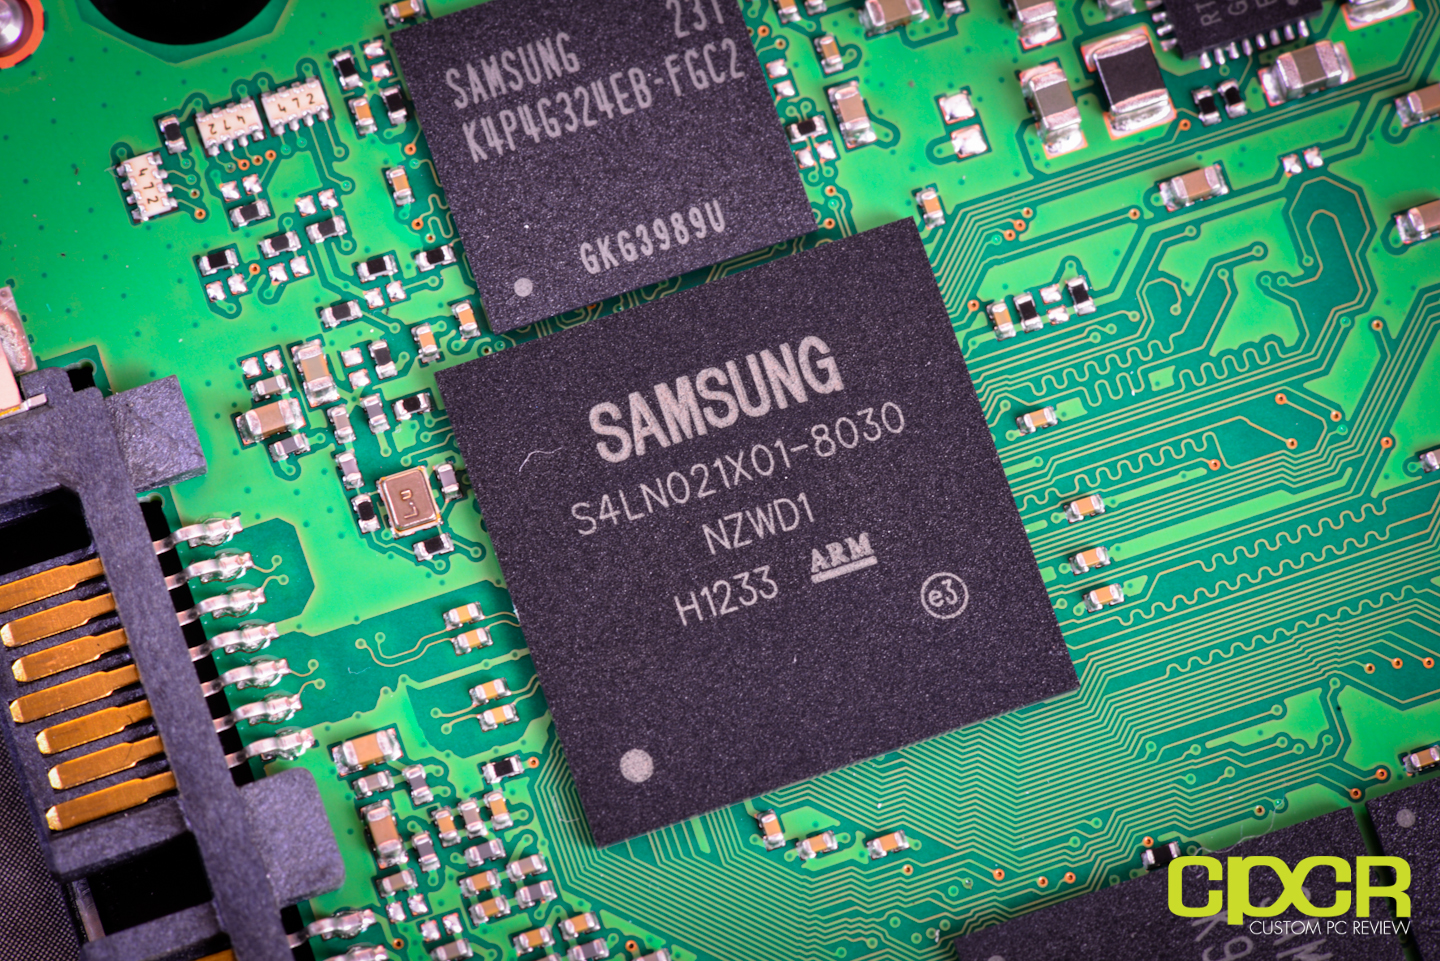 Samsung Ssd 840 Pro Series